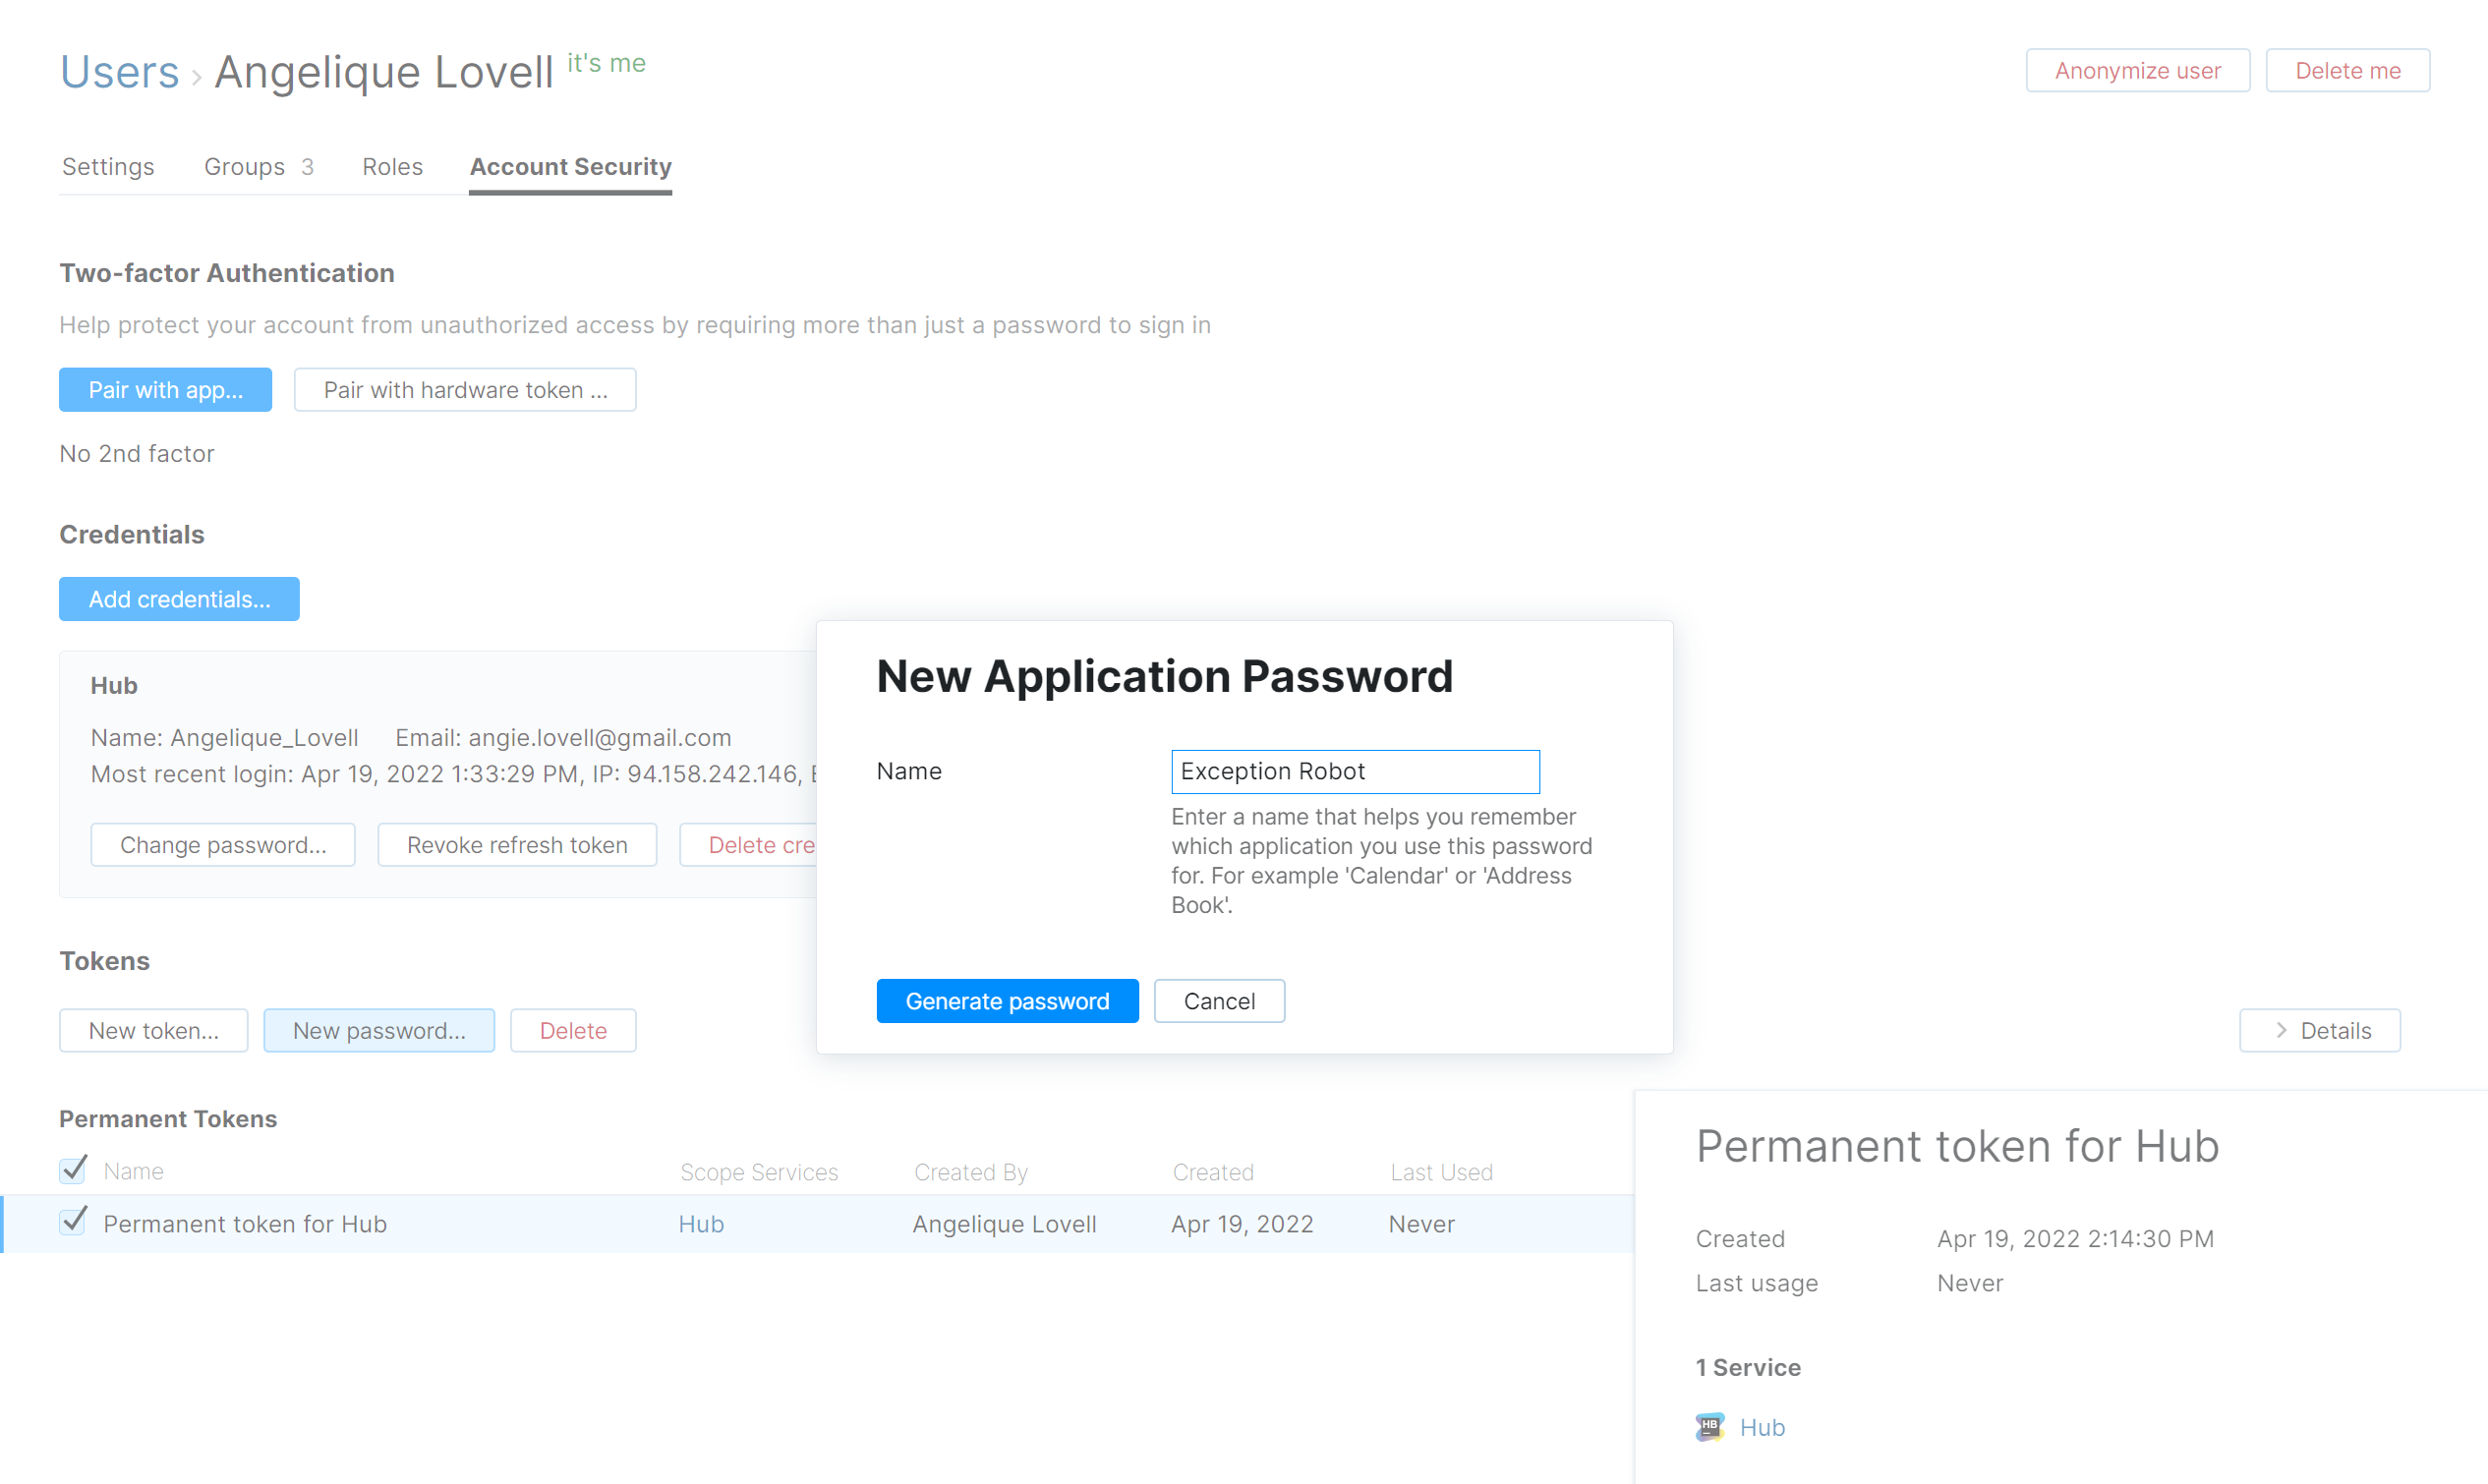 New application password dialog